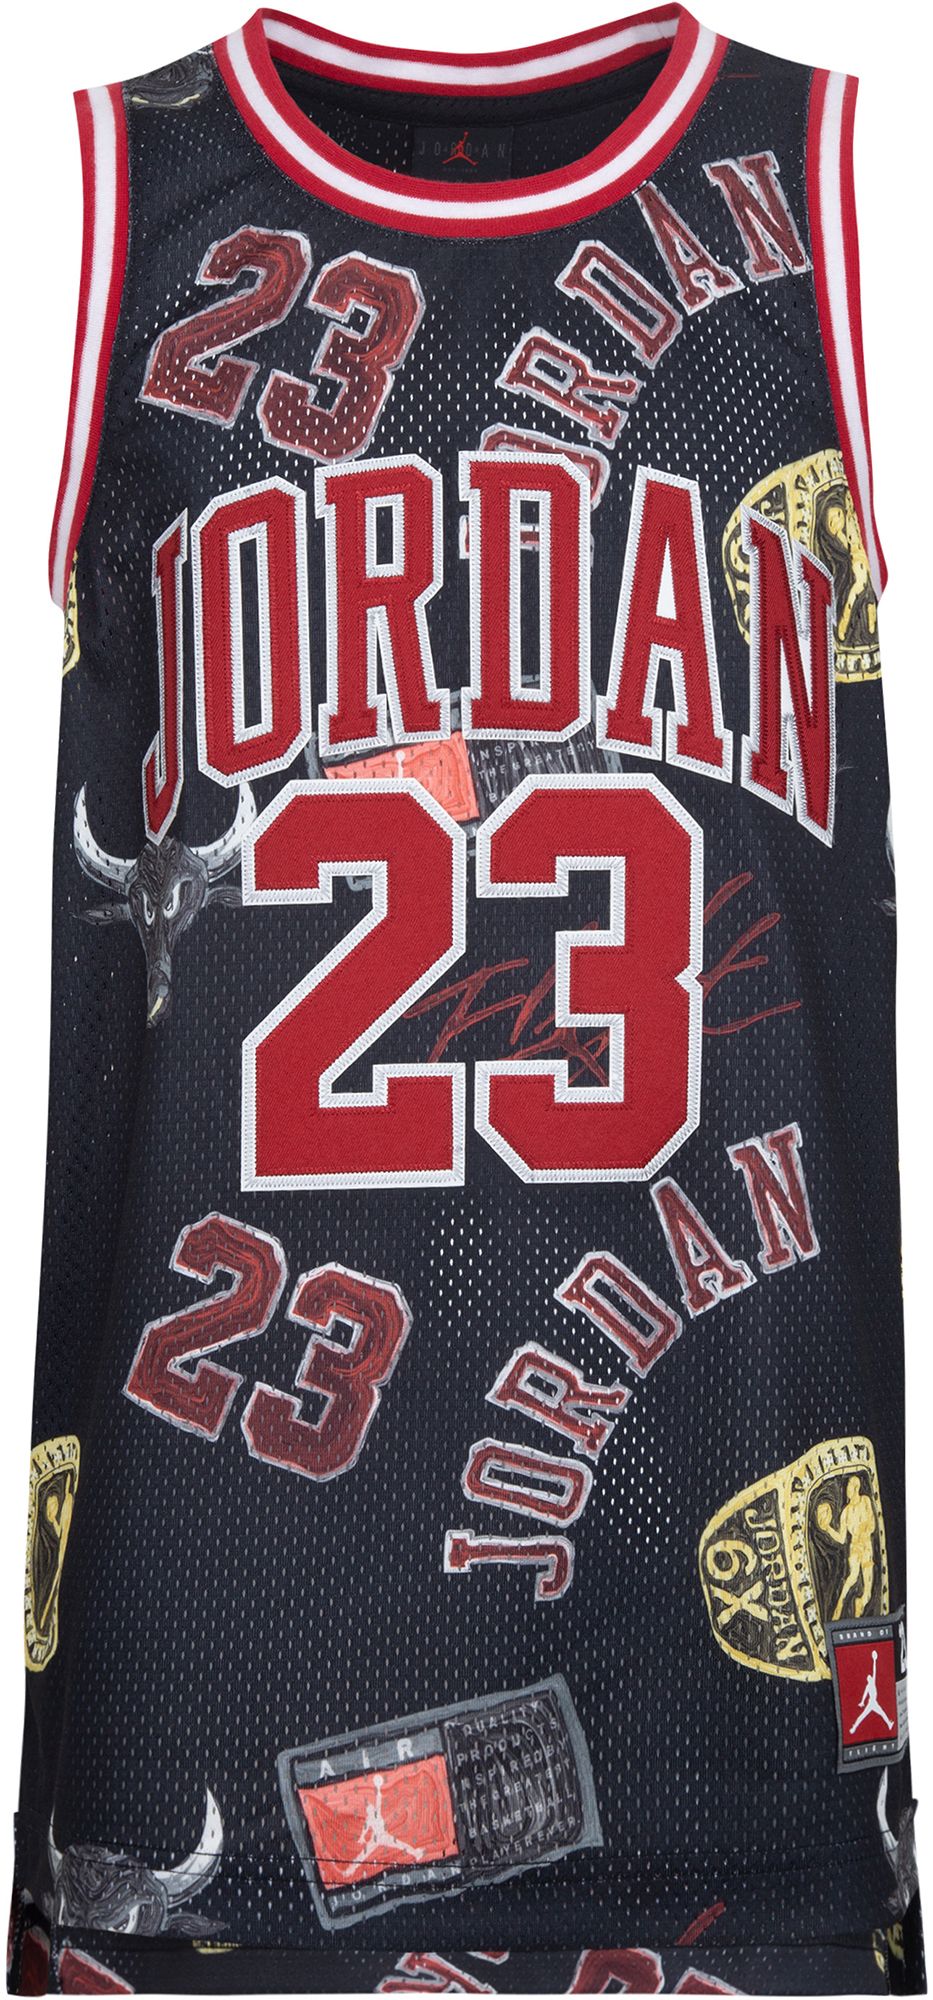 Jordan Kids 23 Jersey